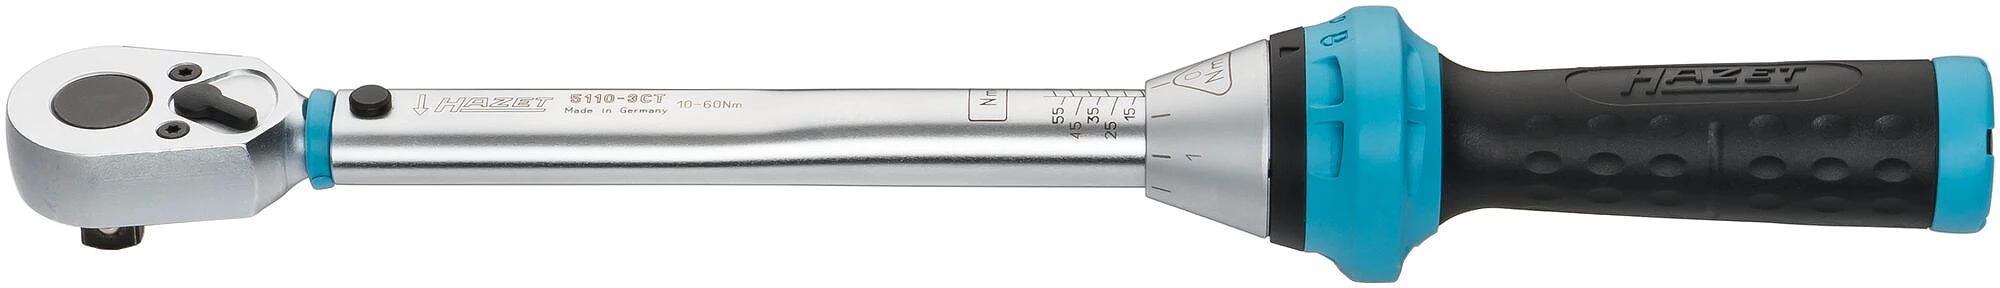 HAZET Drehmoment-Schlüssel - Nm min-max: 10 – 60 Nm - 3/8 5110